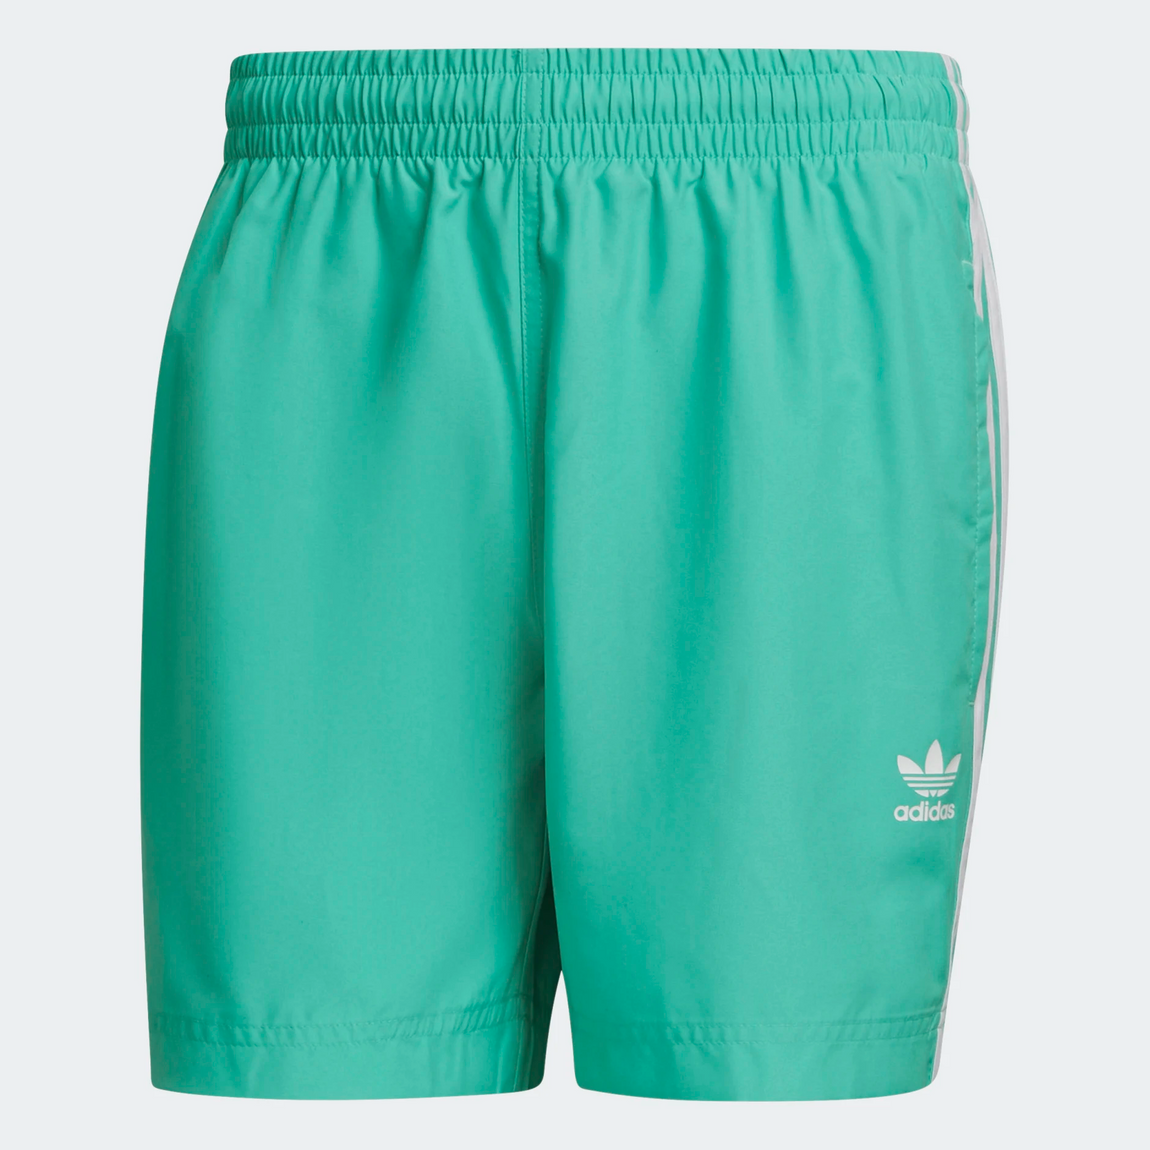 Adidas Classics 3-Stripes Swim Shorts (Hi-Res Green/White) - Adidas Classics 3-Stripes Swim Shorts (Hi-Res Green/White) - 